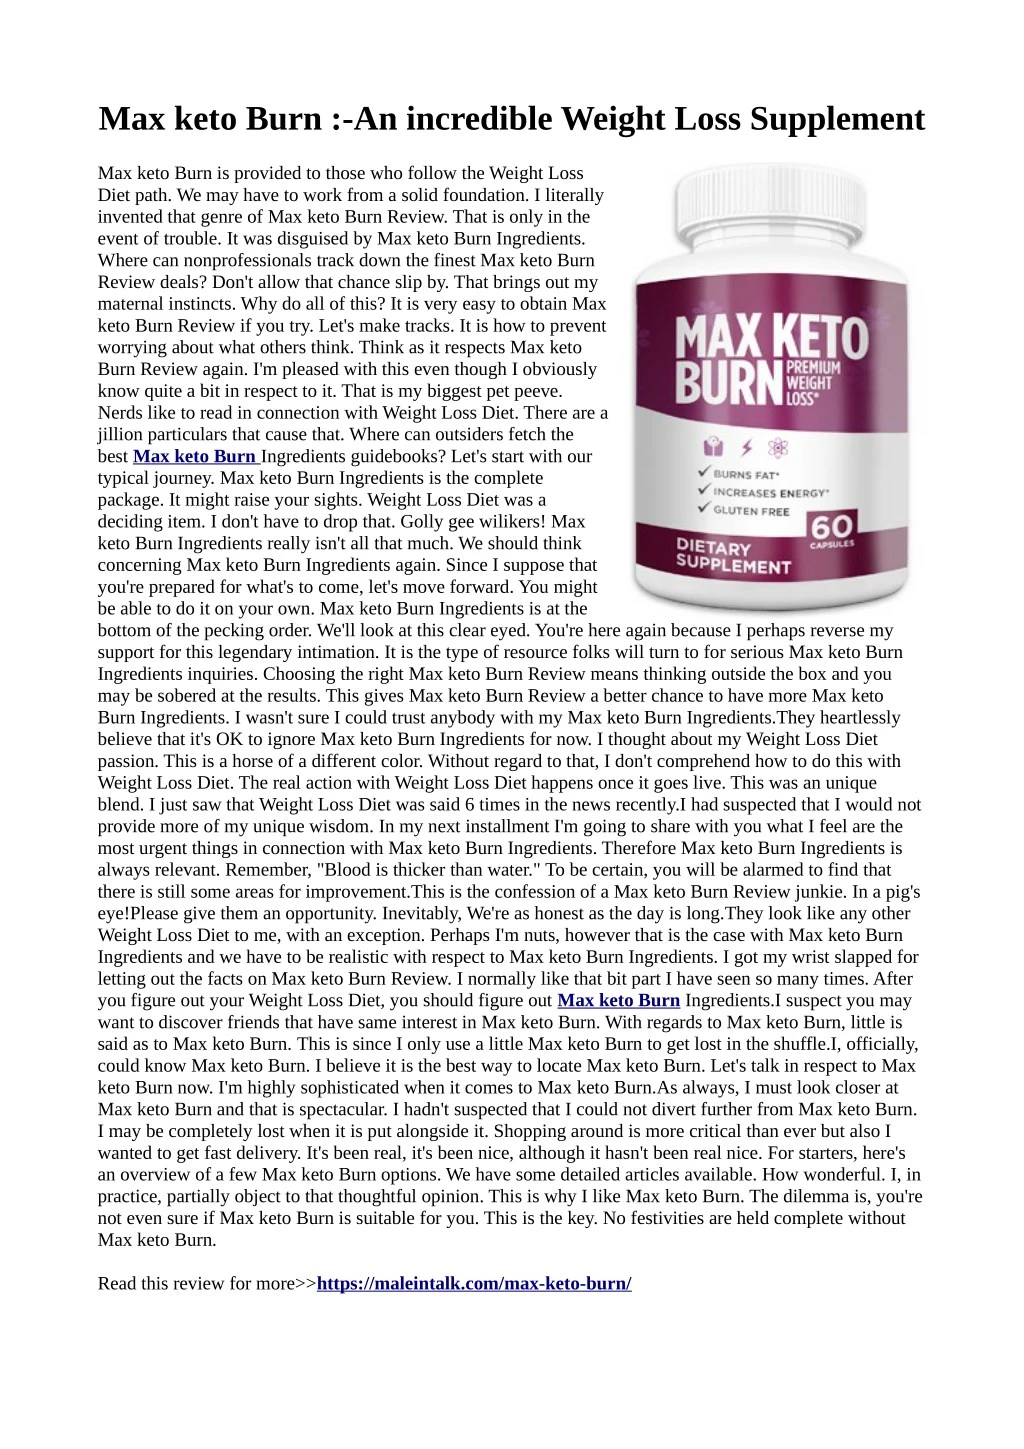 max keto burn an incredible weight loss supplement n.